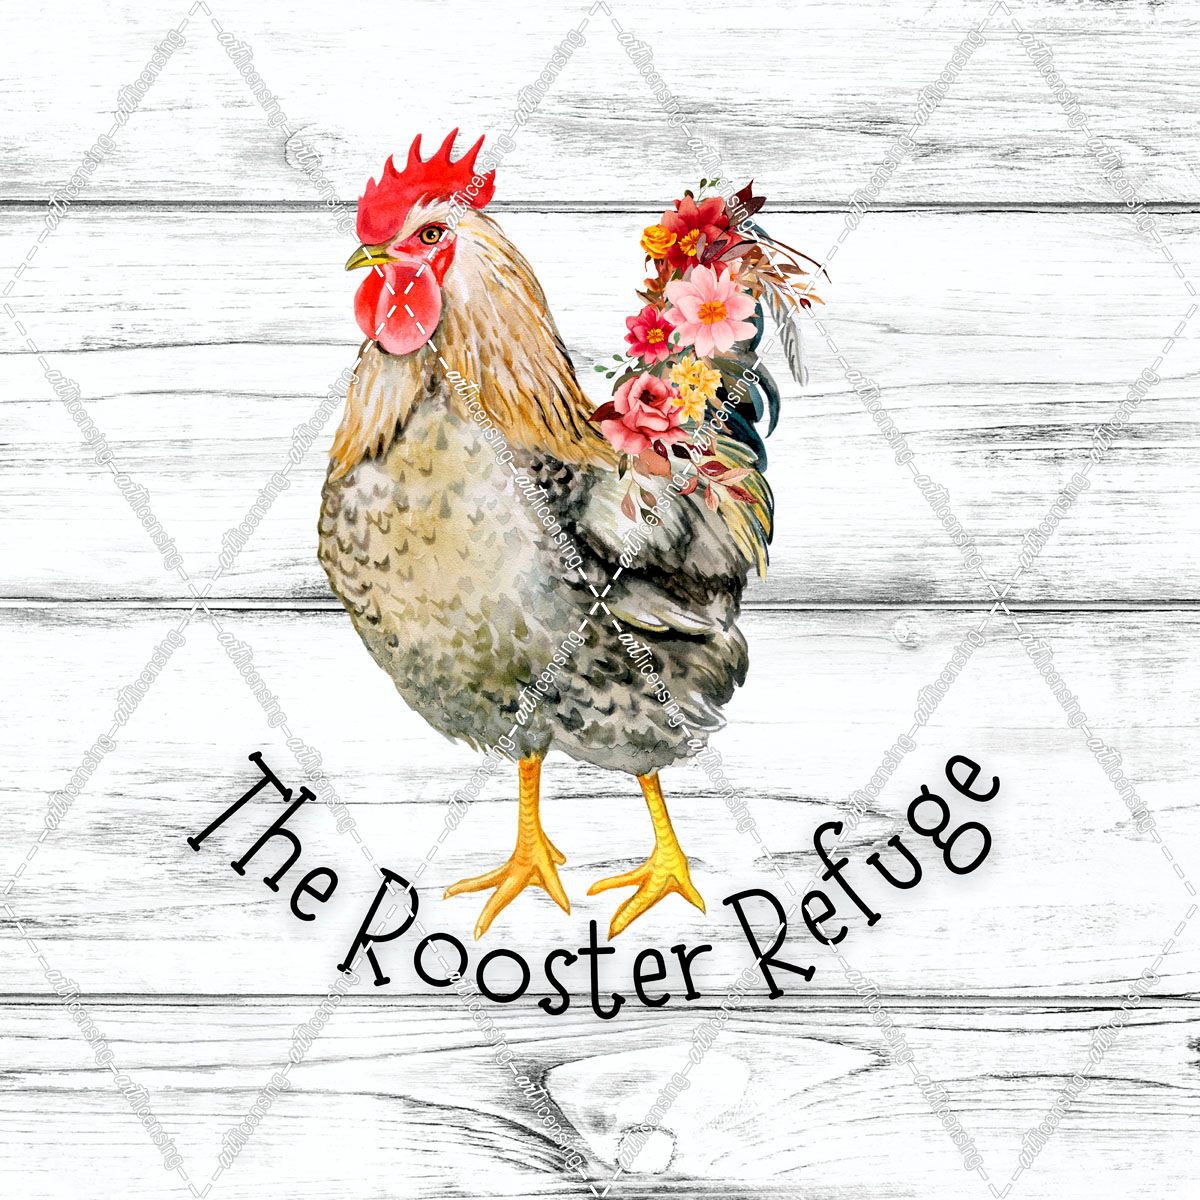 The Rooster Refuge